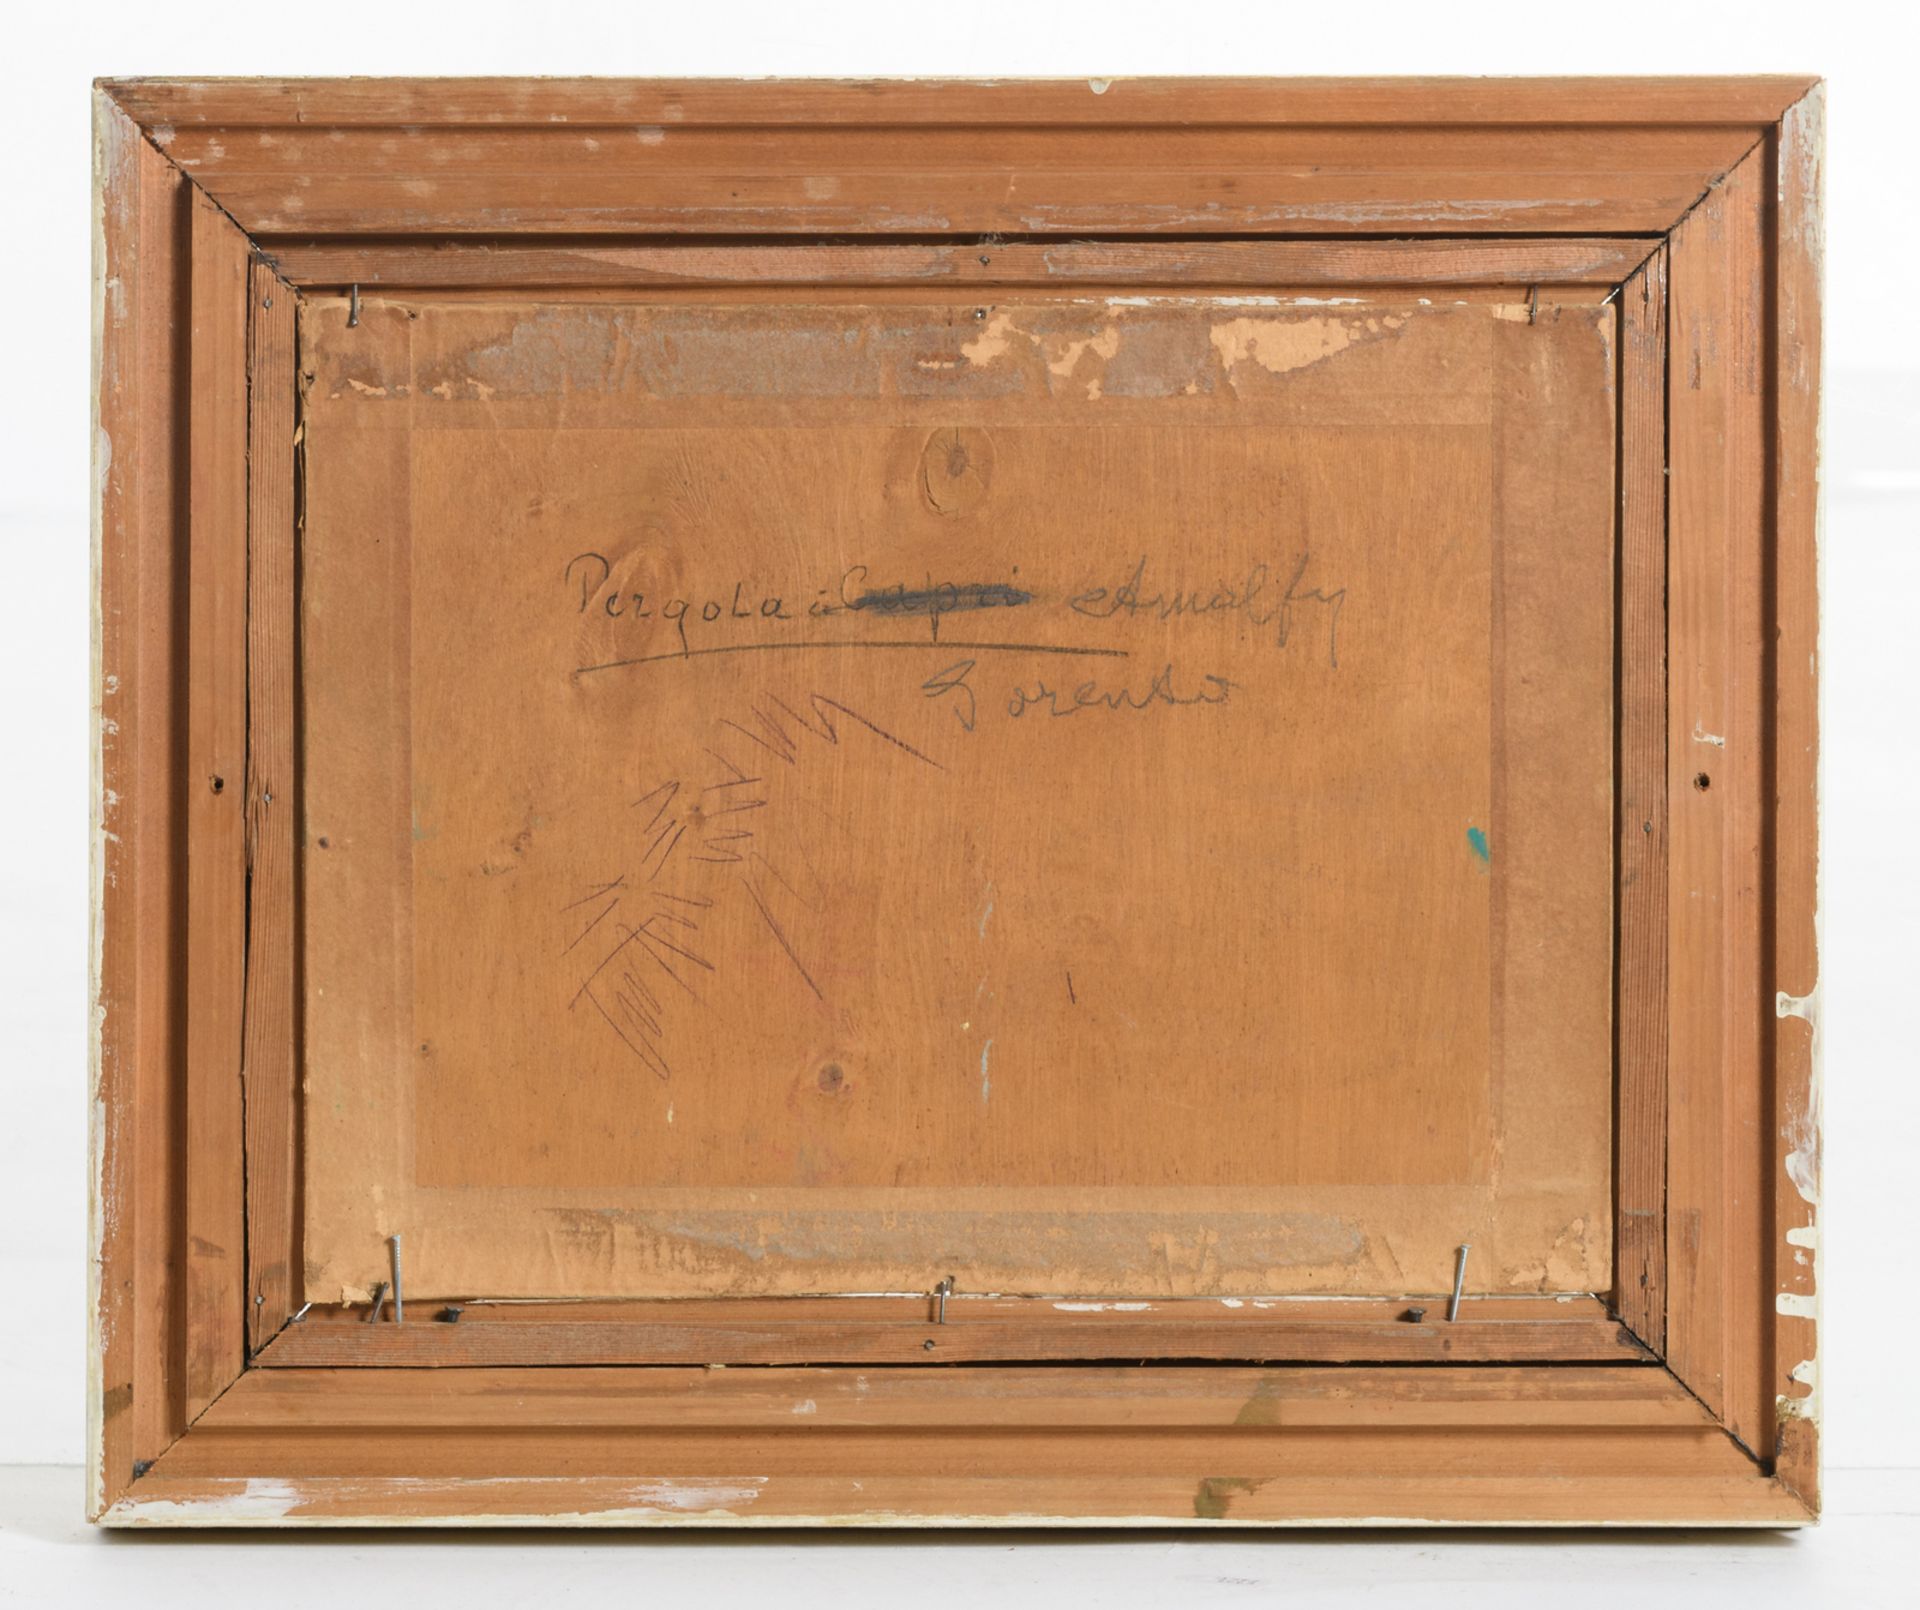 Verbrugghe Ch., 'Pergola in Sorento Amalfi', oil on plywood, 25,5 x 33,5 cm - Image 3 of 4